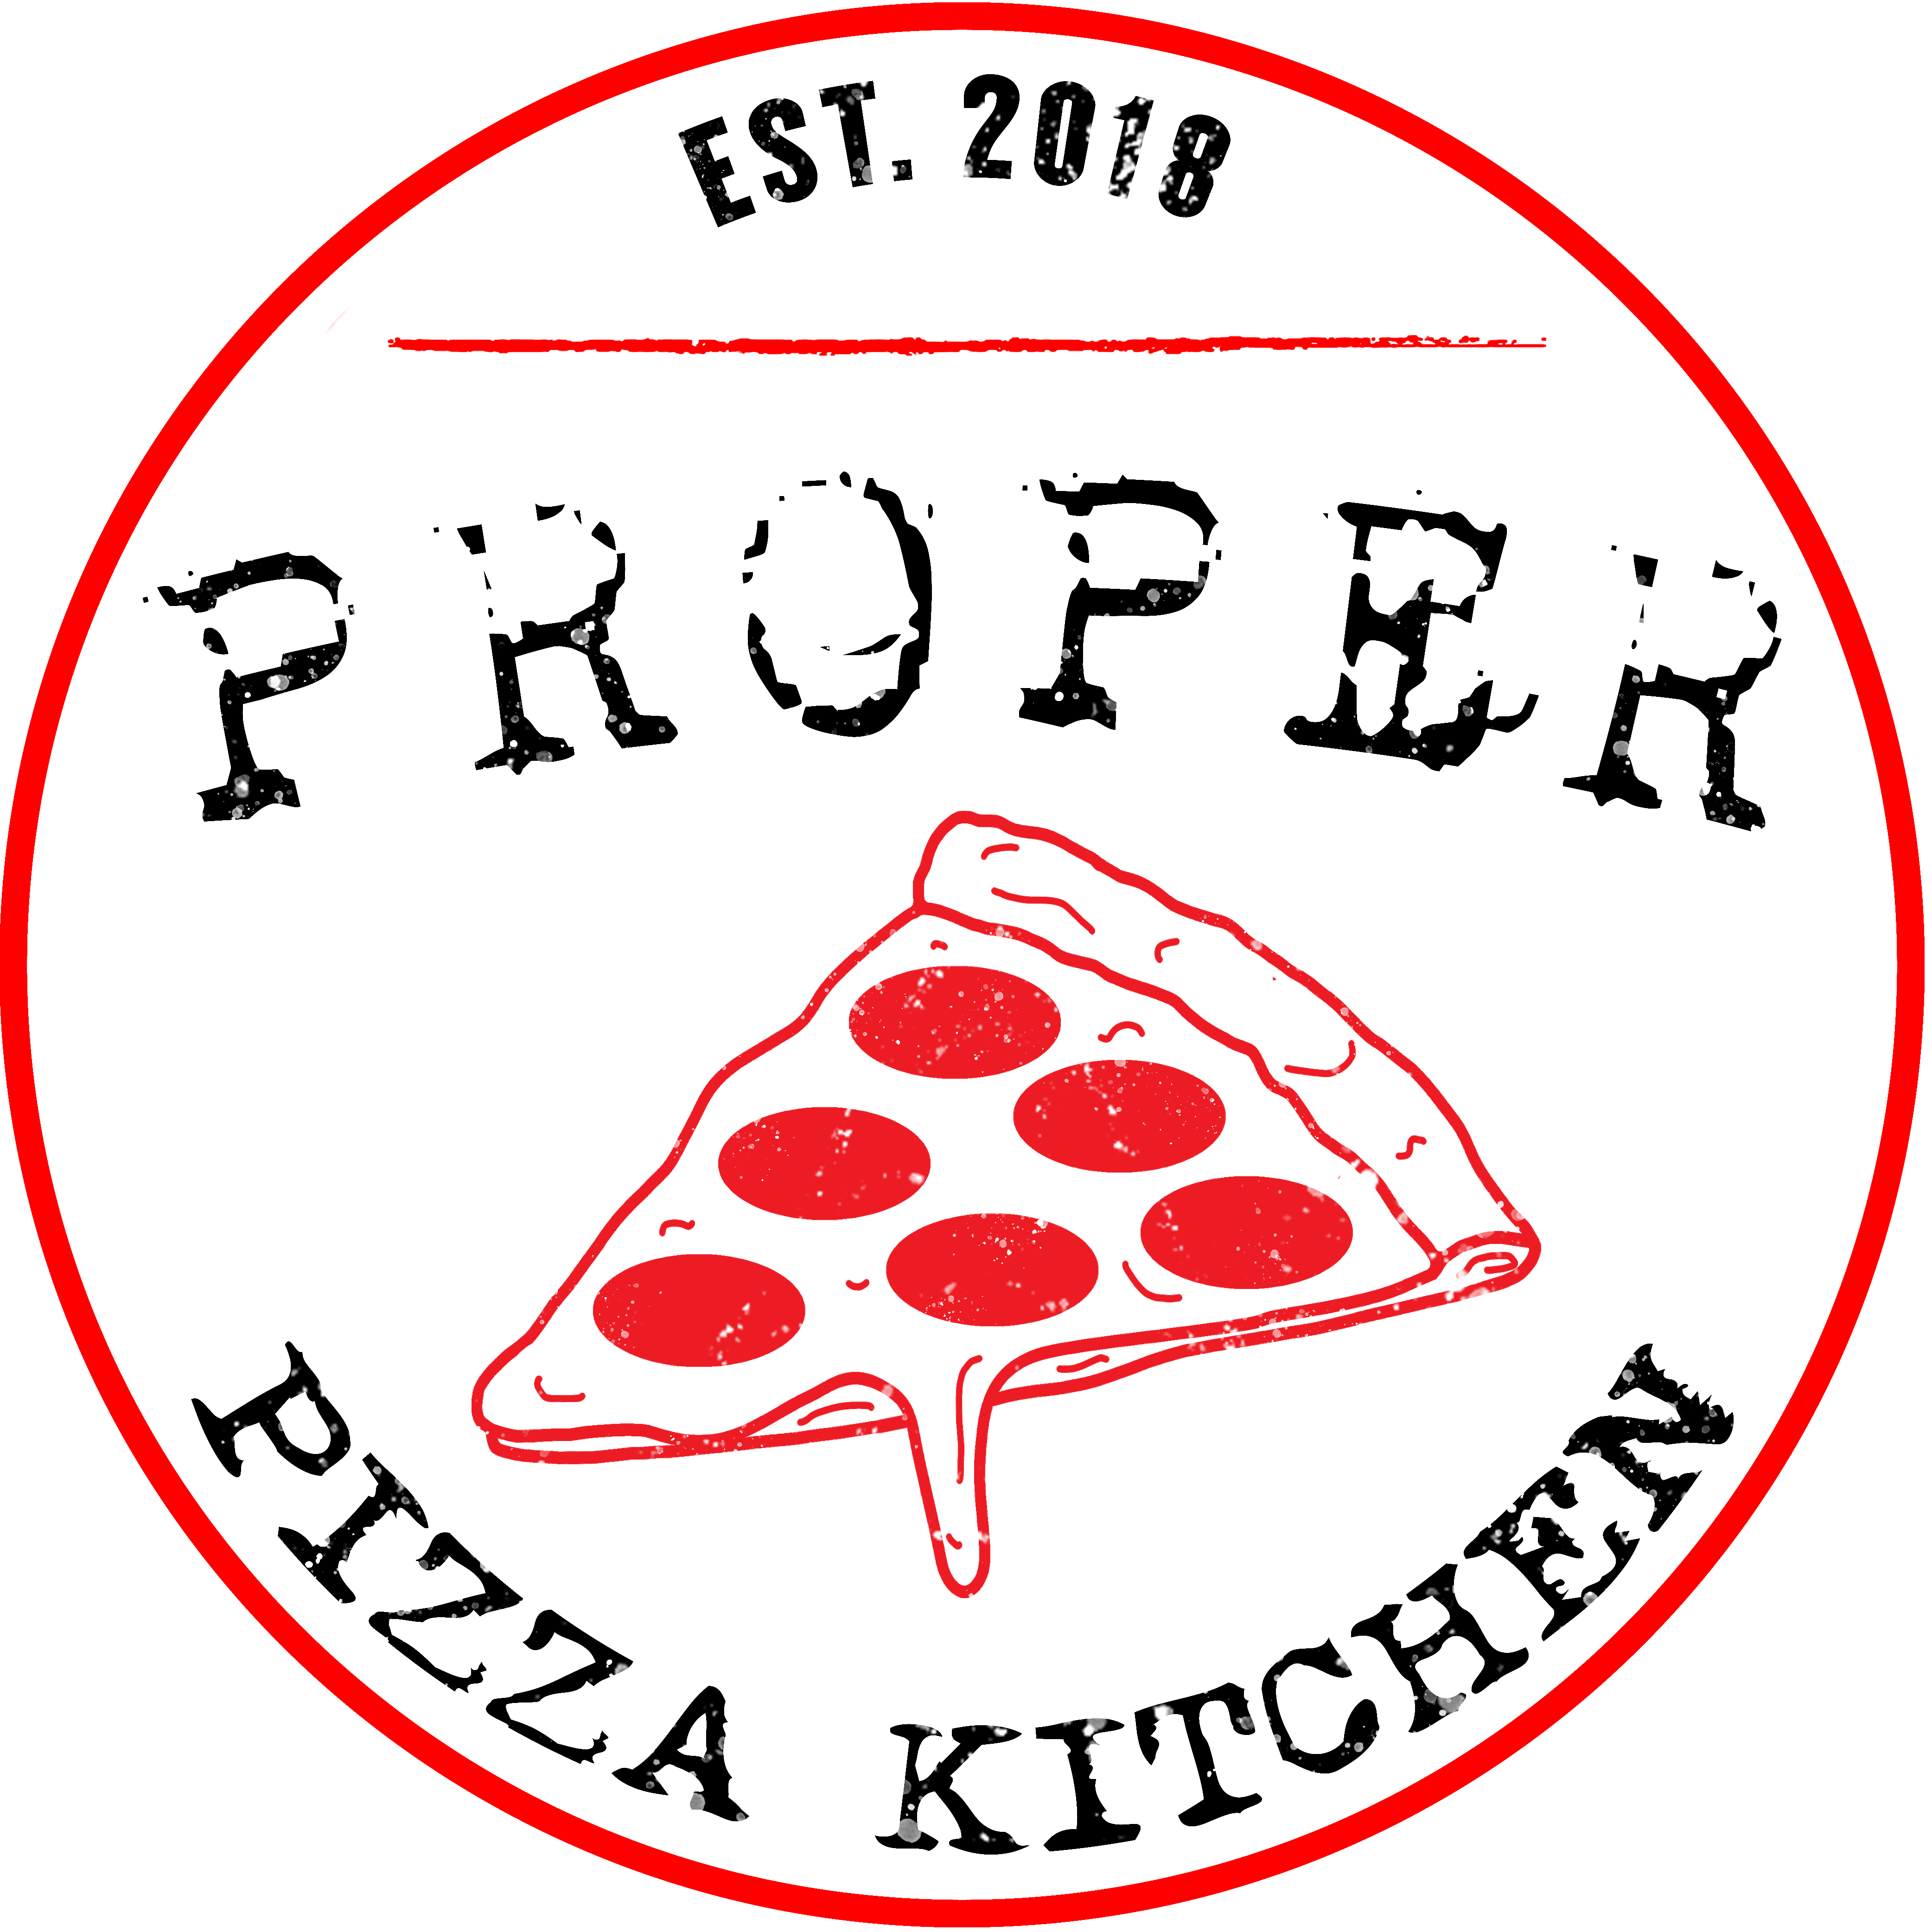 Company Logo For Proper Pizza Kitchen'